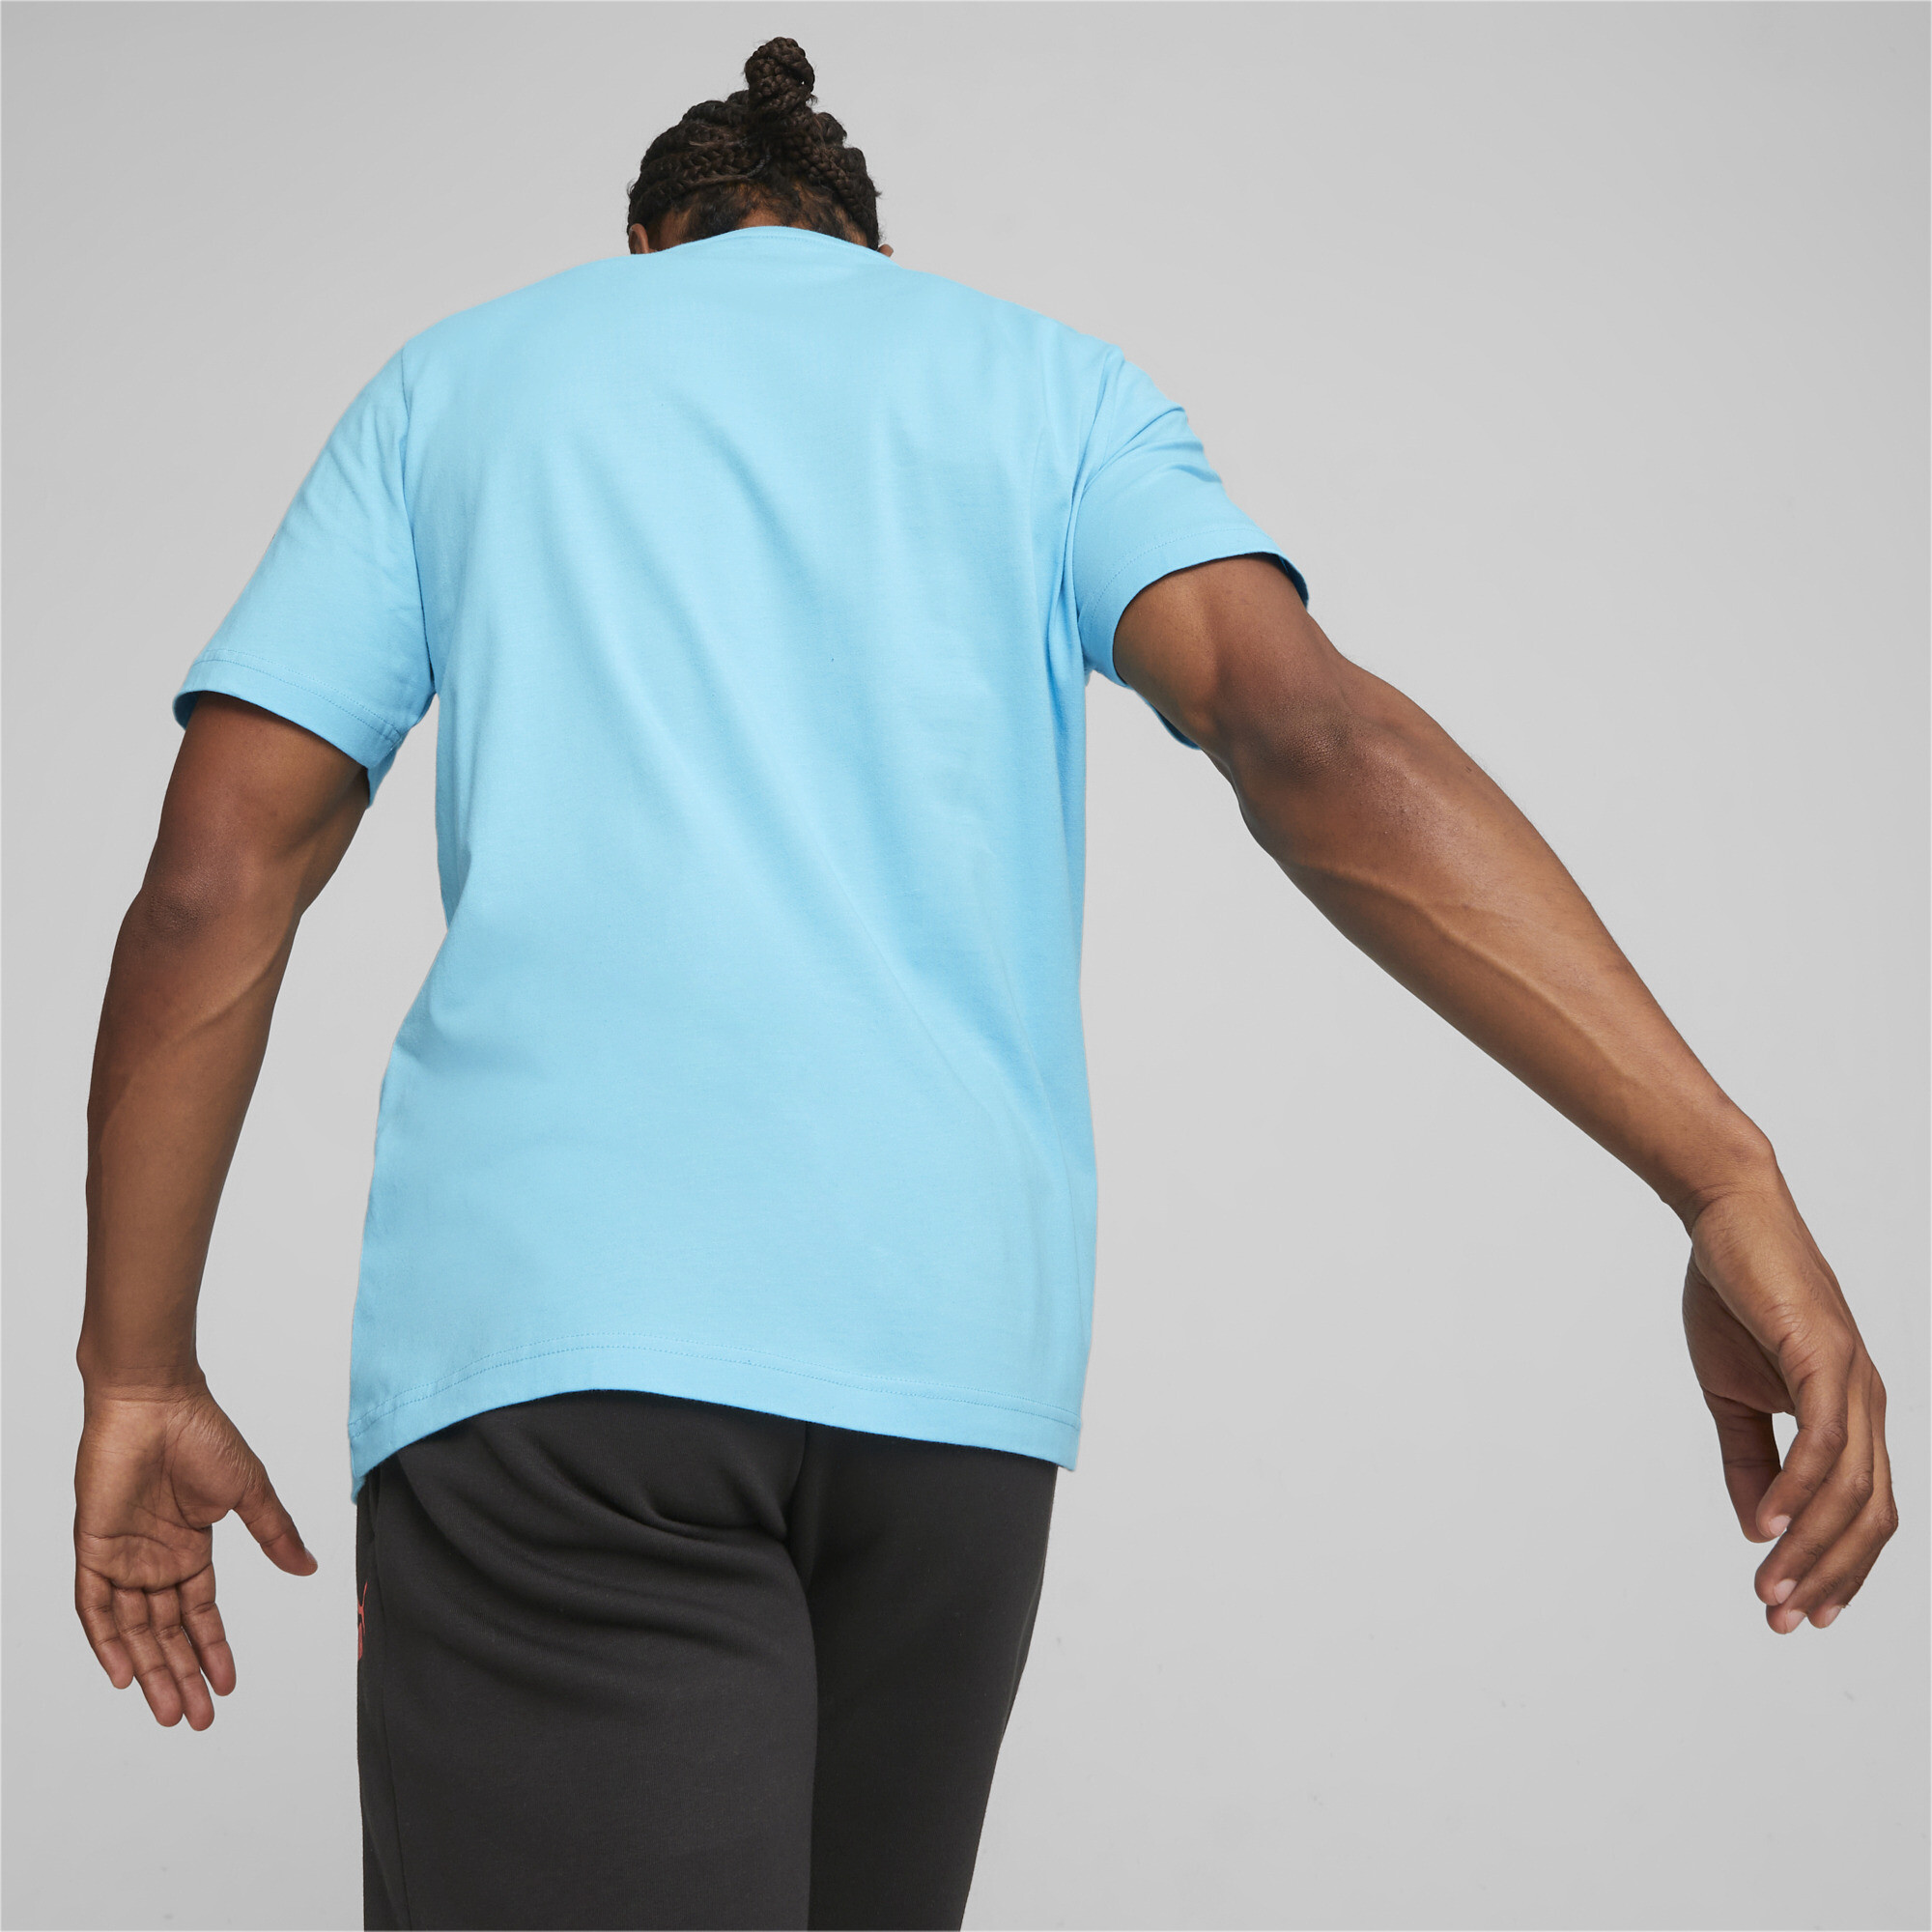 Men's PUMA Manchester City FtblCore Graphic T-Shirt In Blue, Size Medium